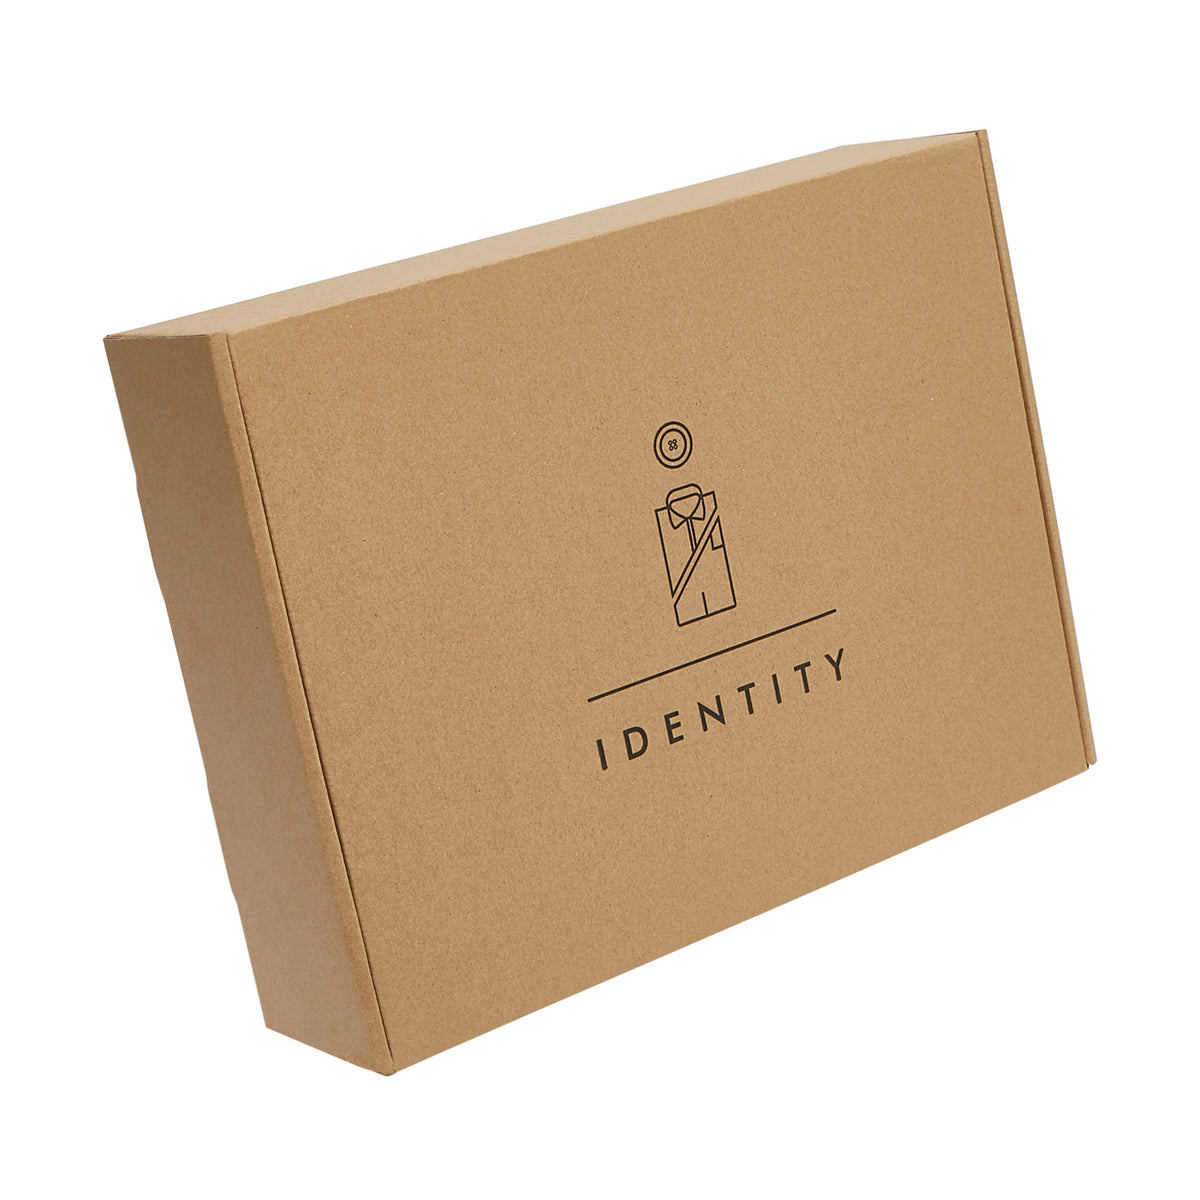 Cardboard Gift Box - 9in X 3in X 12in - IDENTITY Apparel Shop